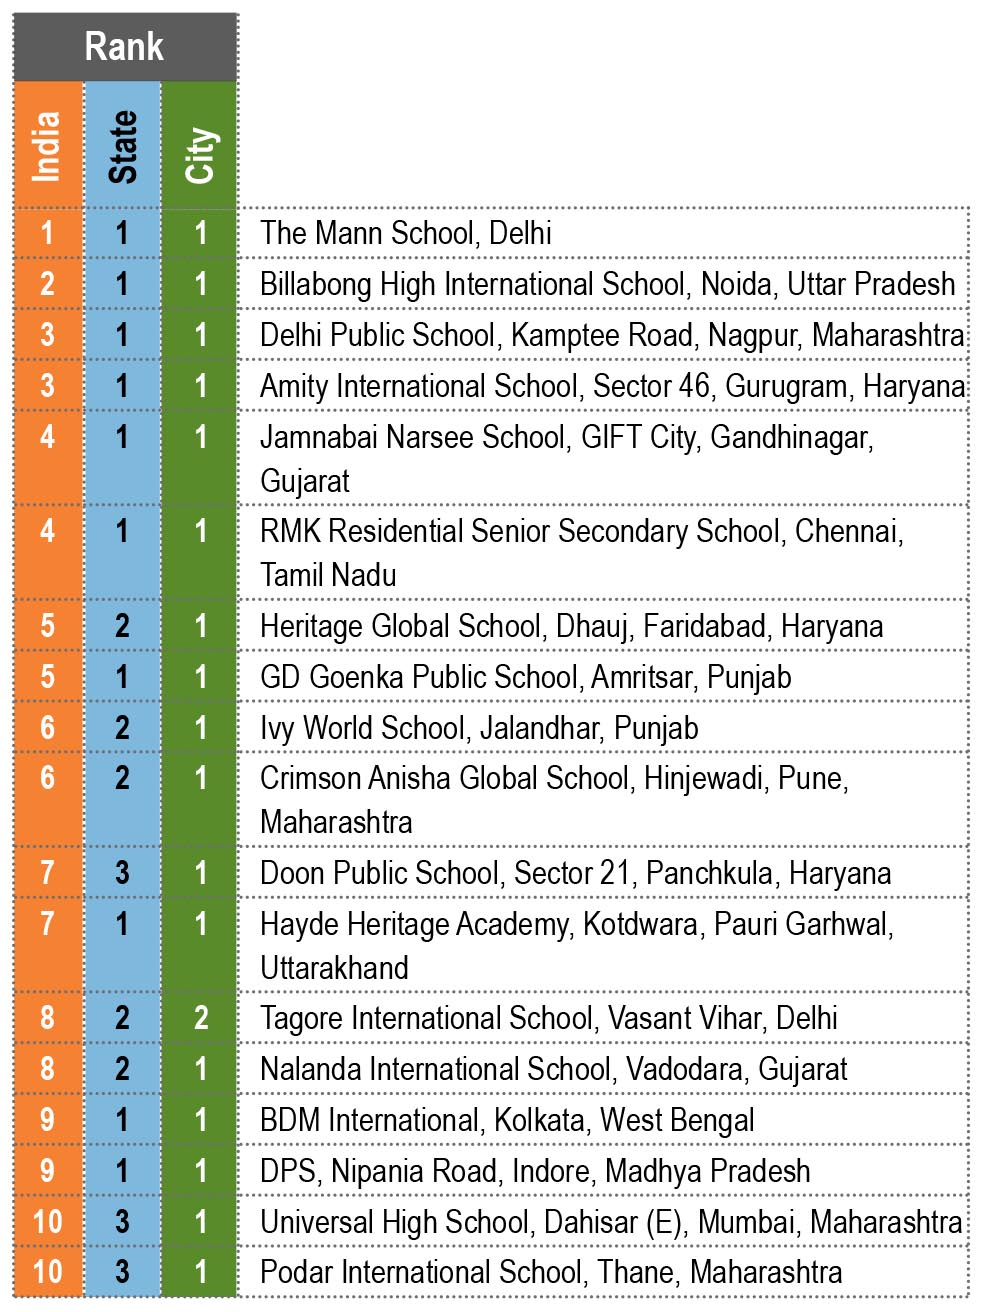 EducationWorld Grand Jury India School Rankings 2020-21